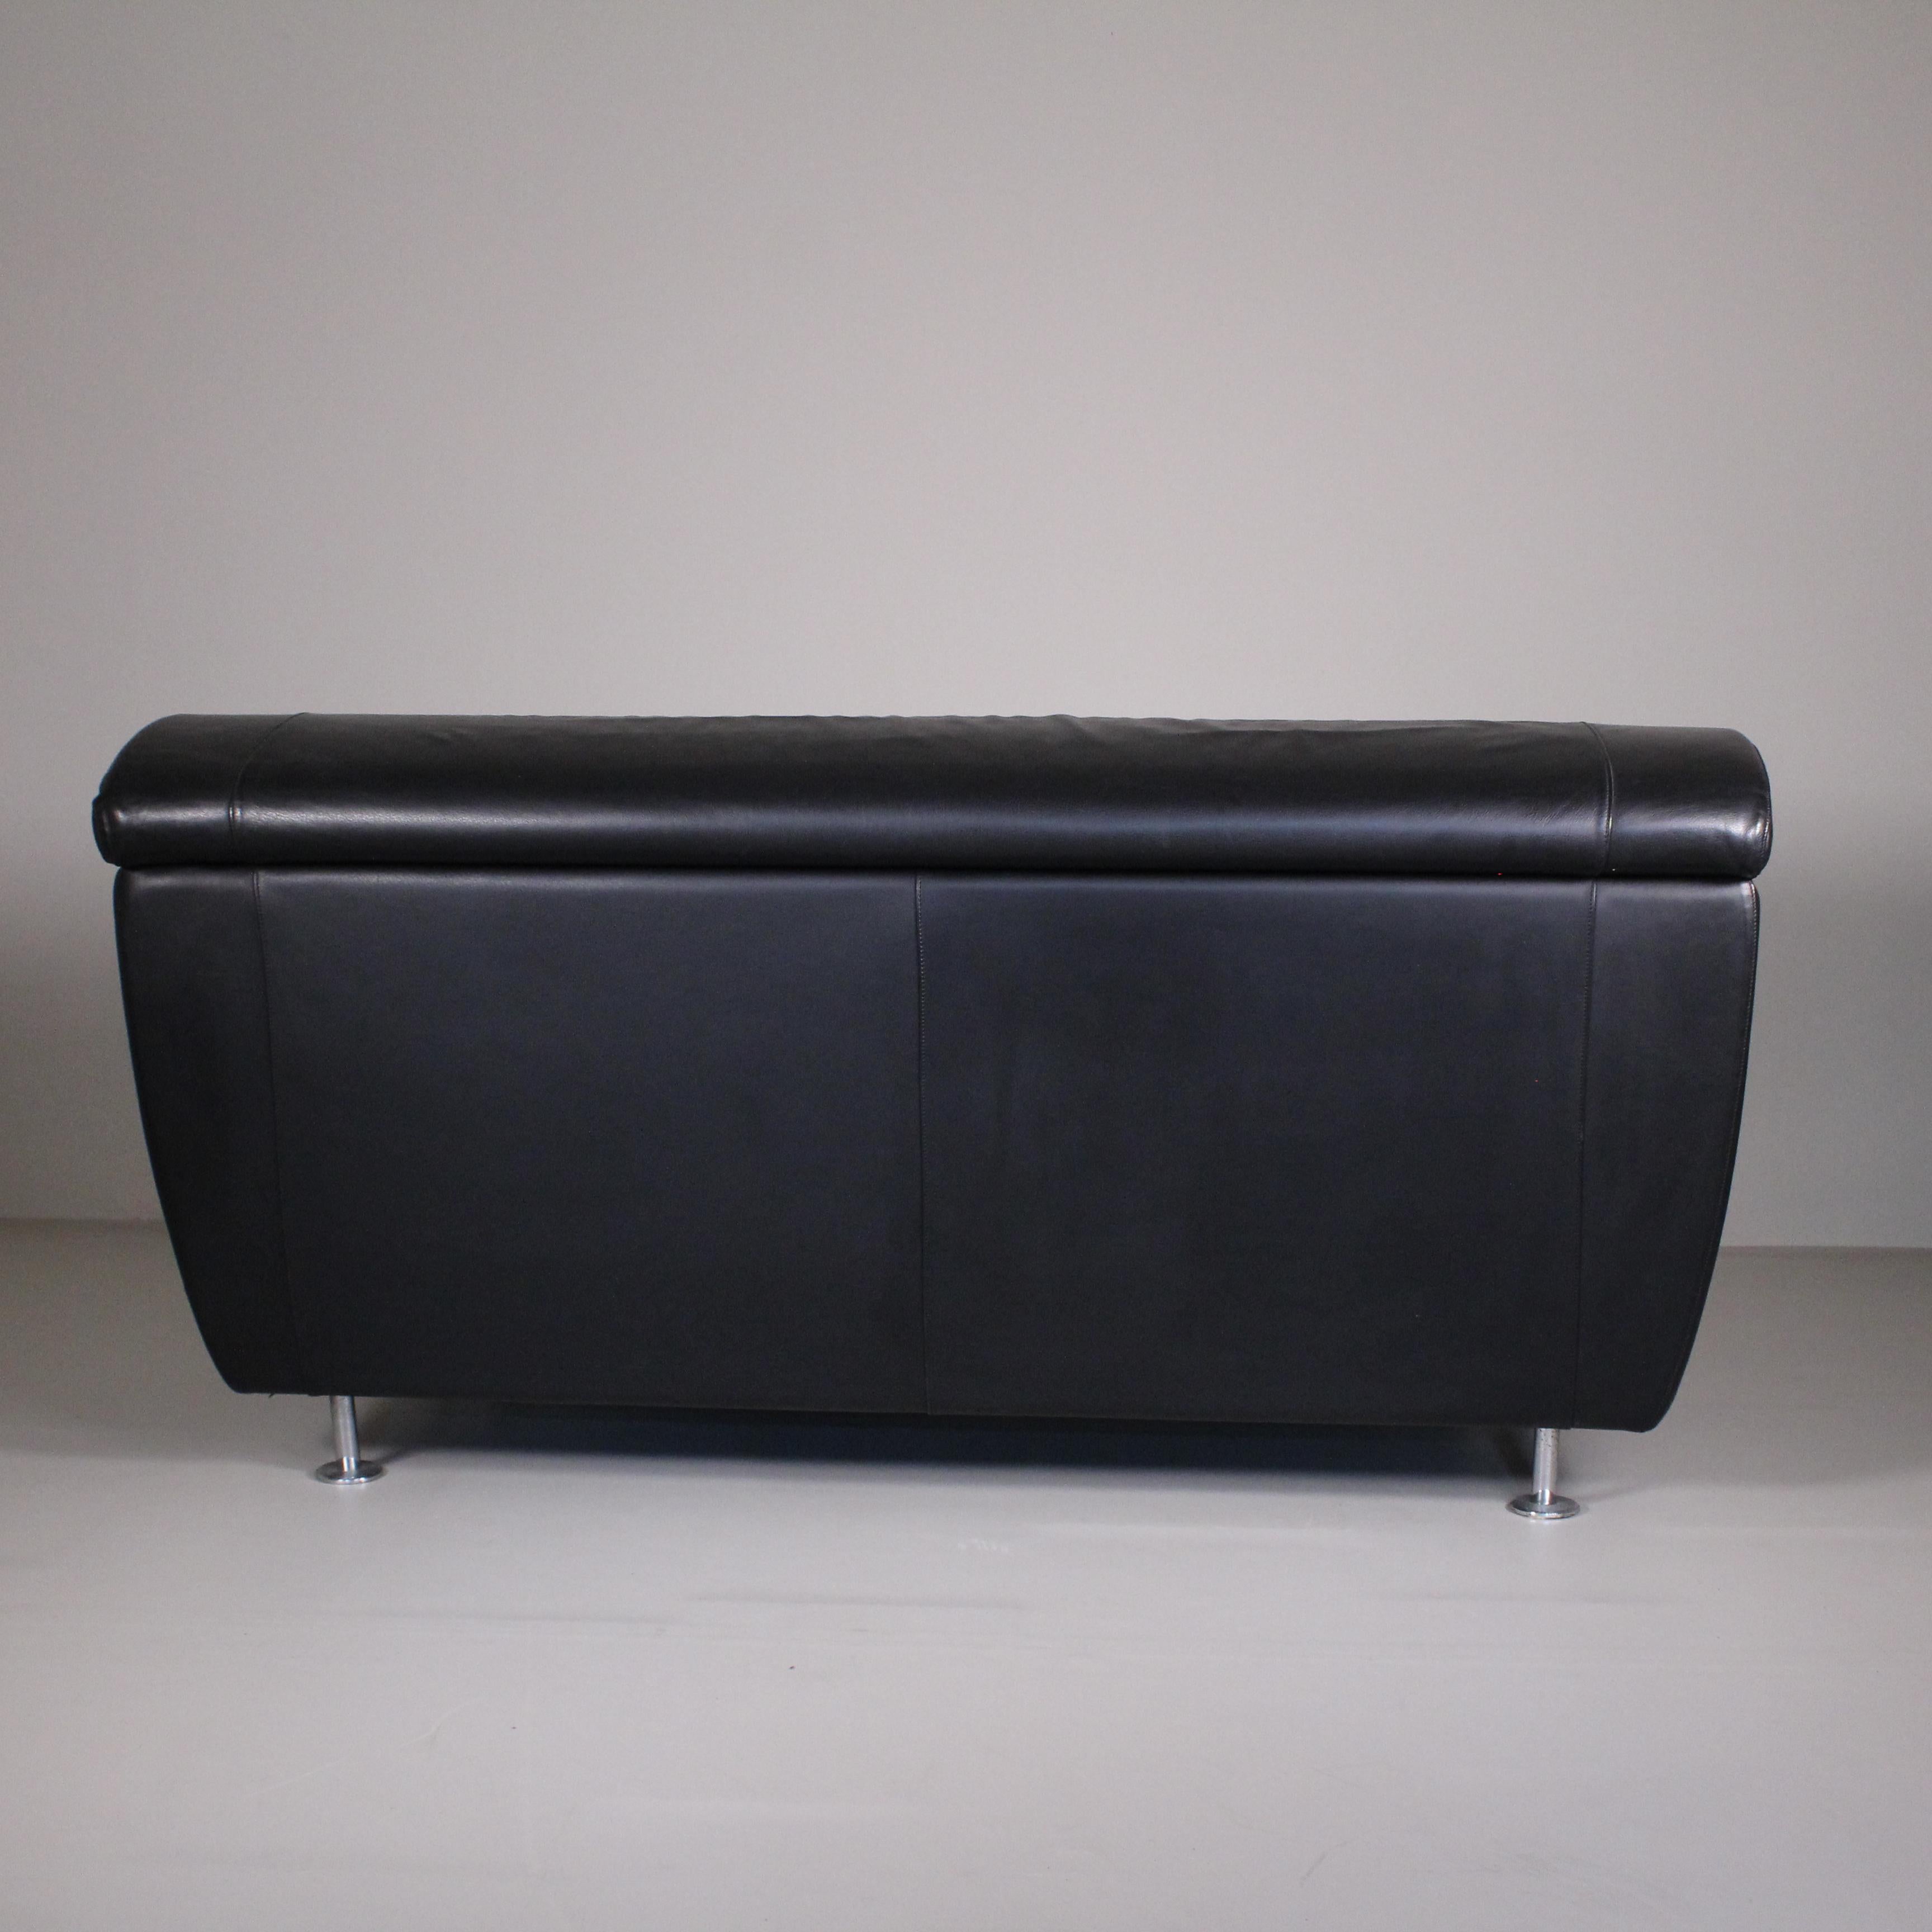  Balzo Loveseat black sofa, Massimo Iosa Ghini, Moroso, 1987 For Sale 2